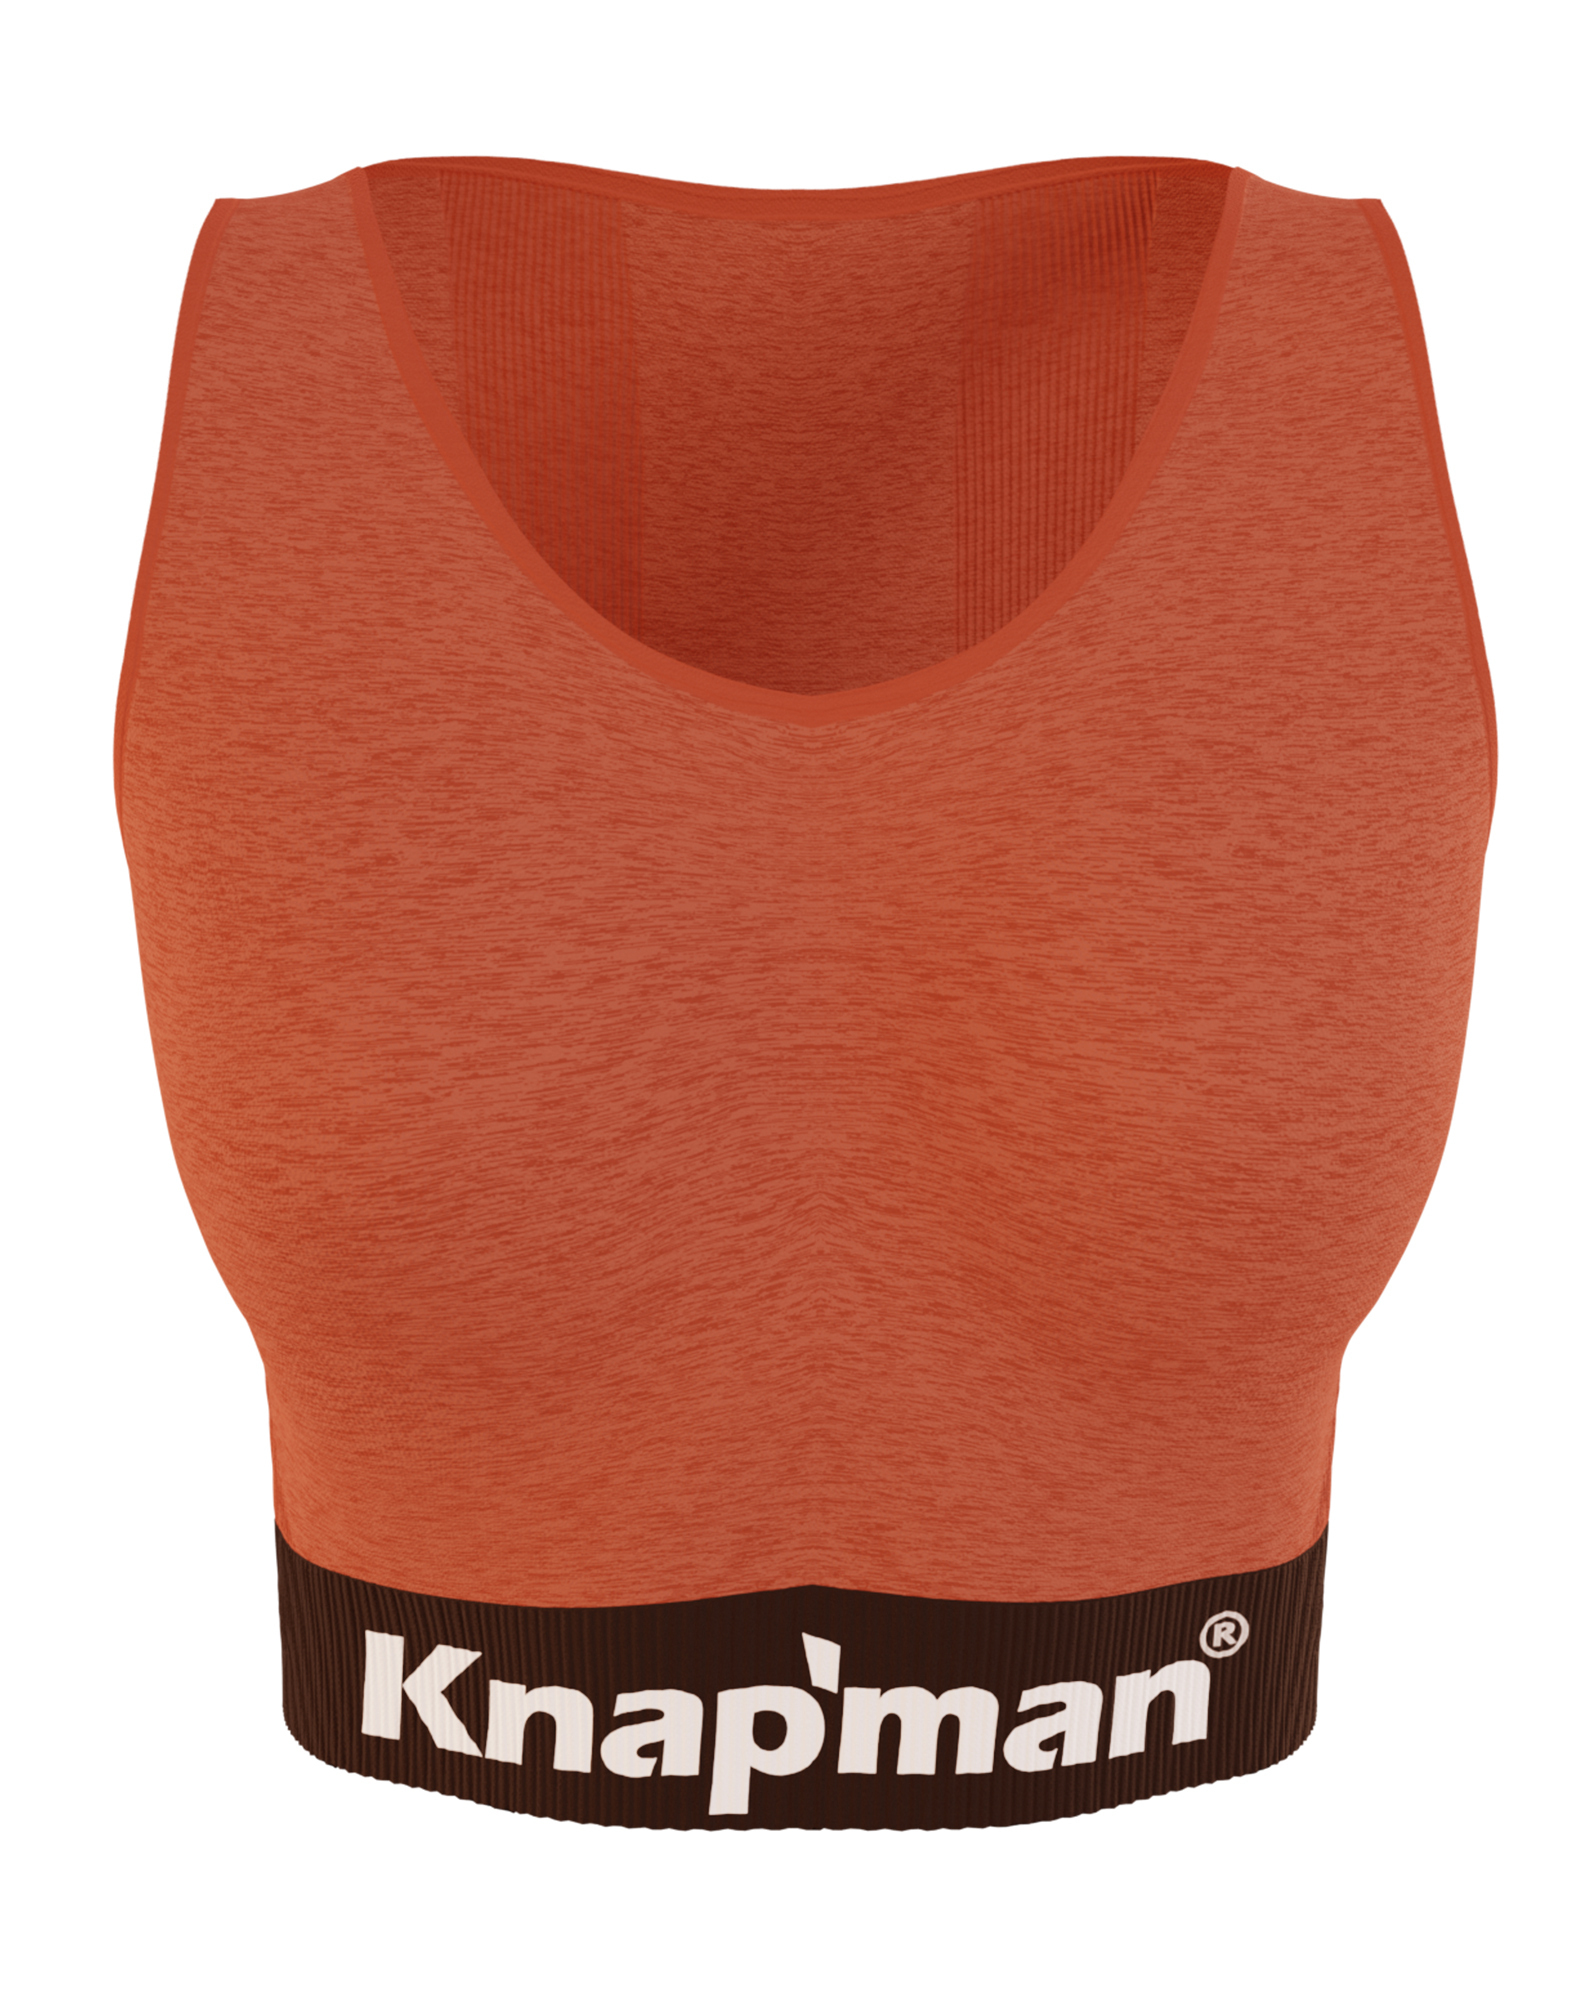 Knap'man FitForm Compressie Sporttop | Oranje melange